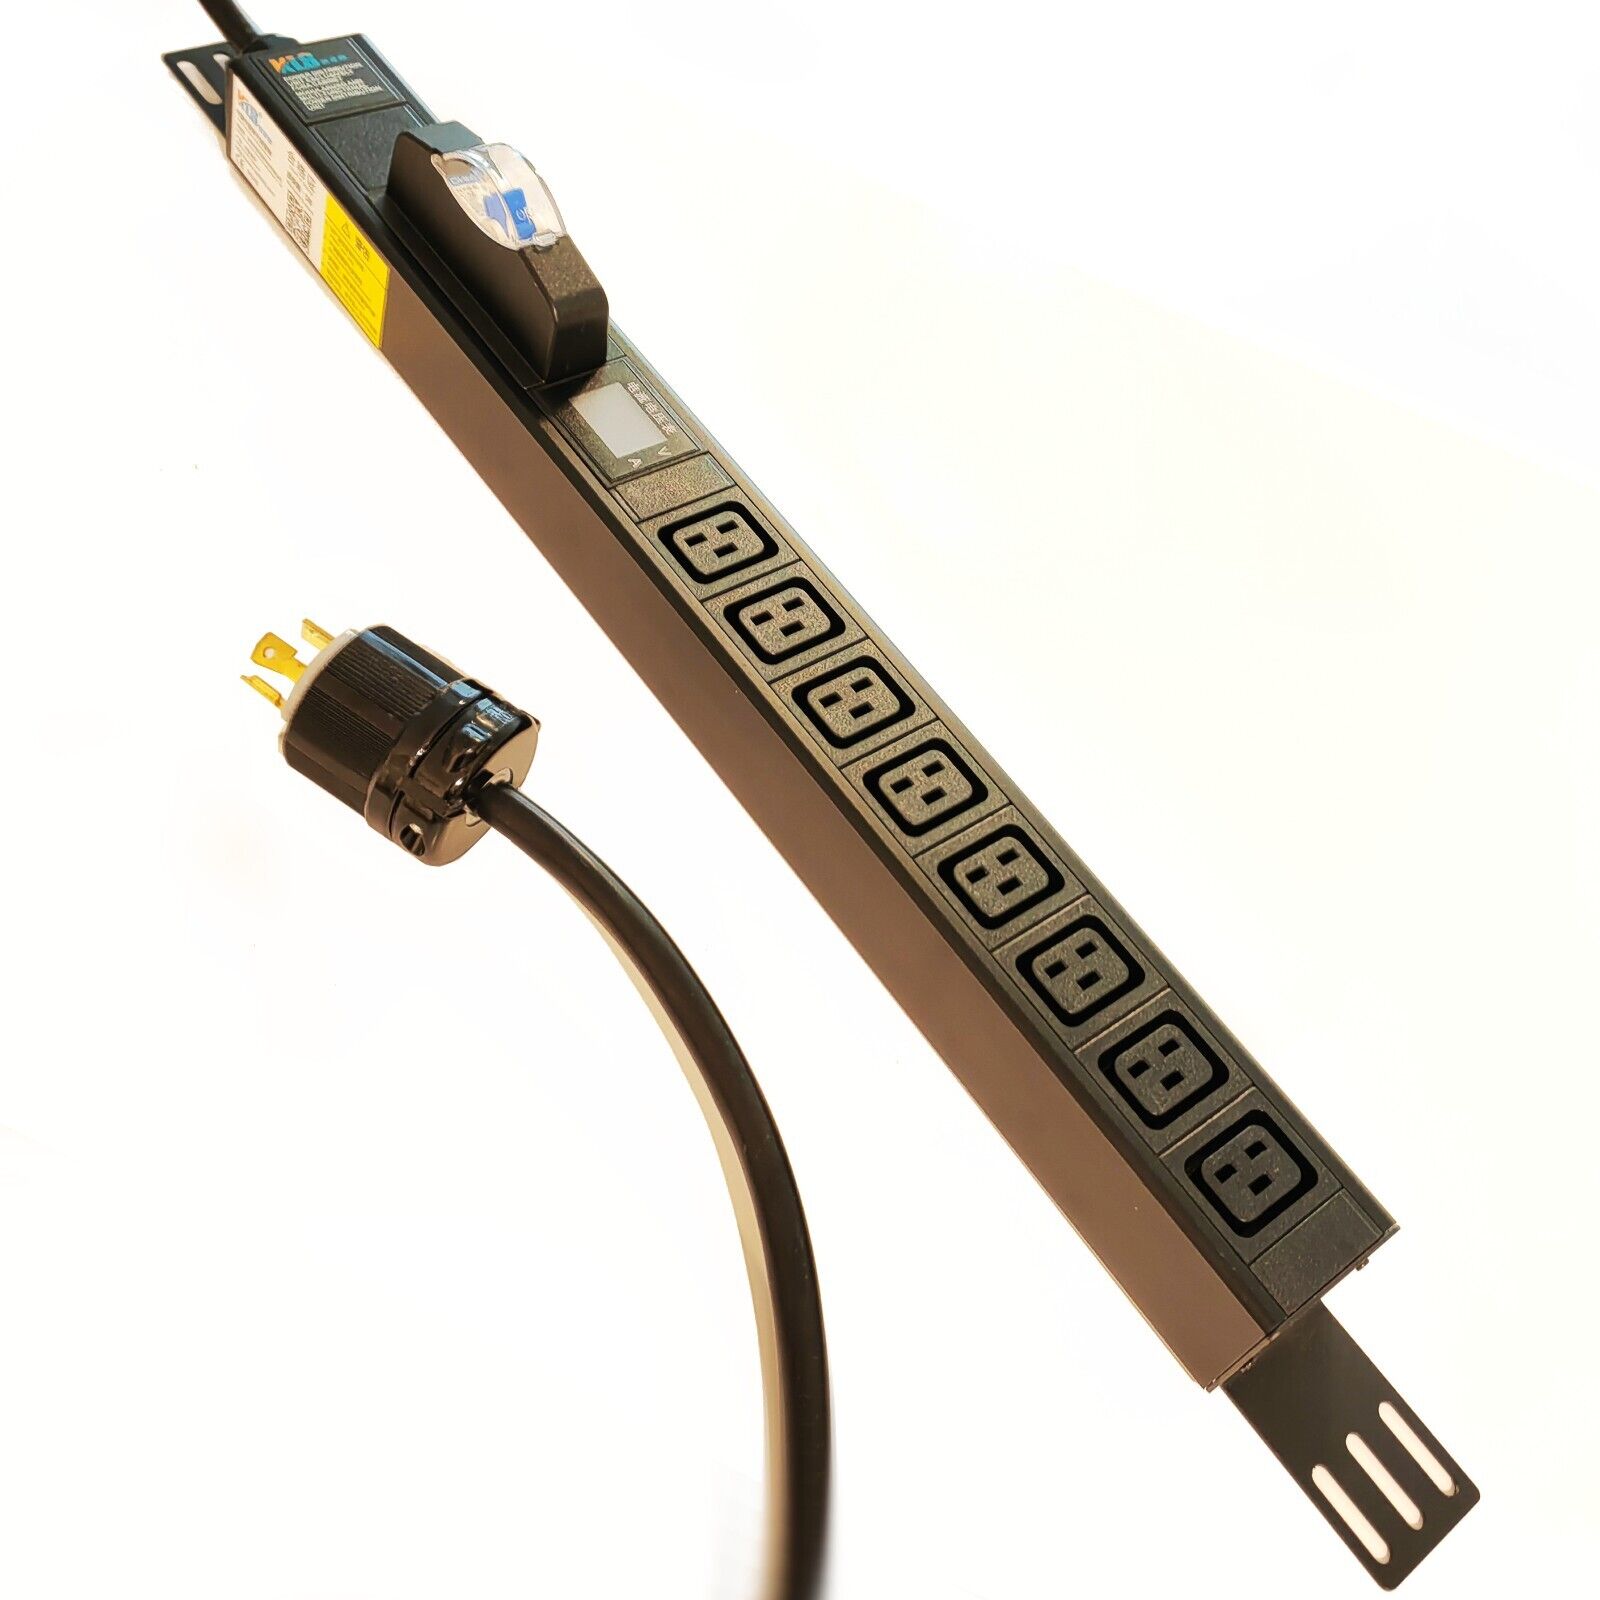 Rack PDU 30A 240V 8way C19 PDU L6-30P plug with smart LCD Meter for mining BTC